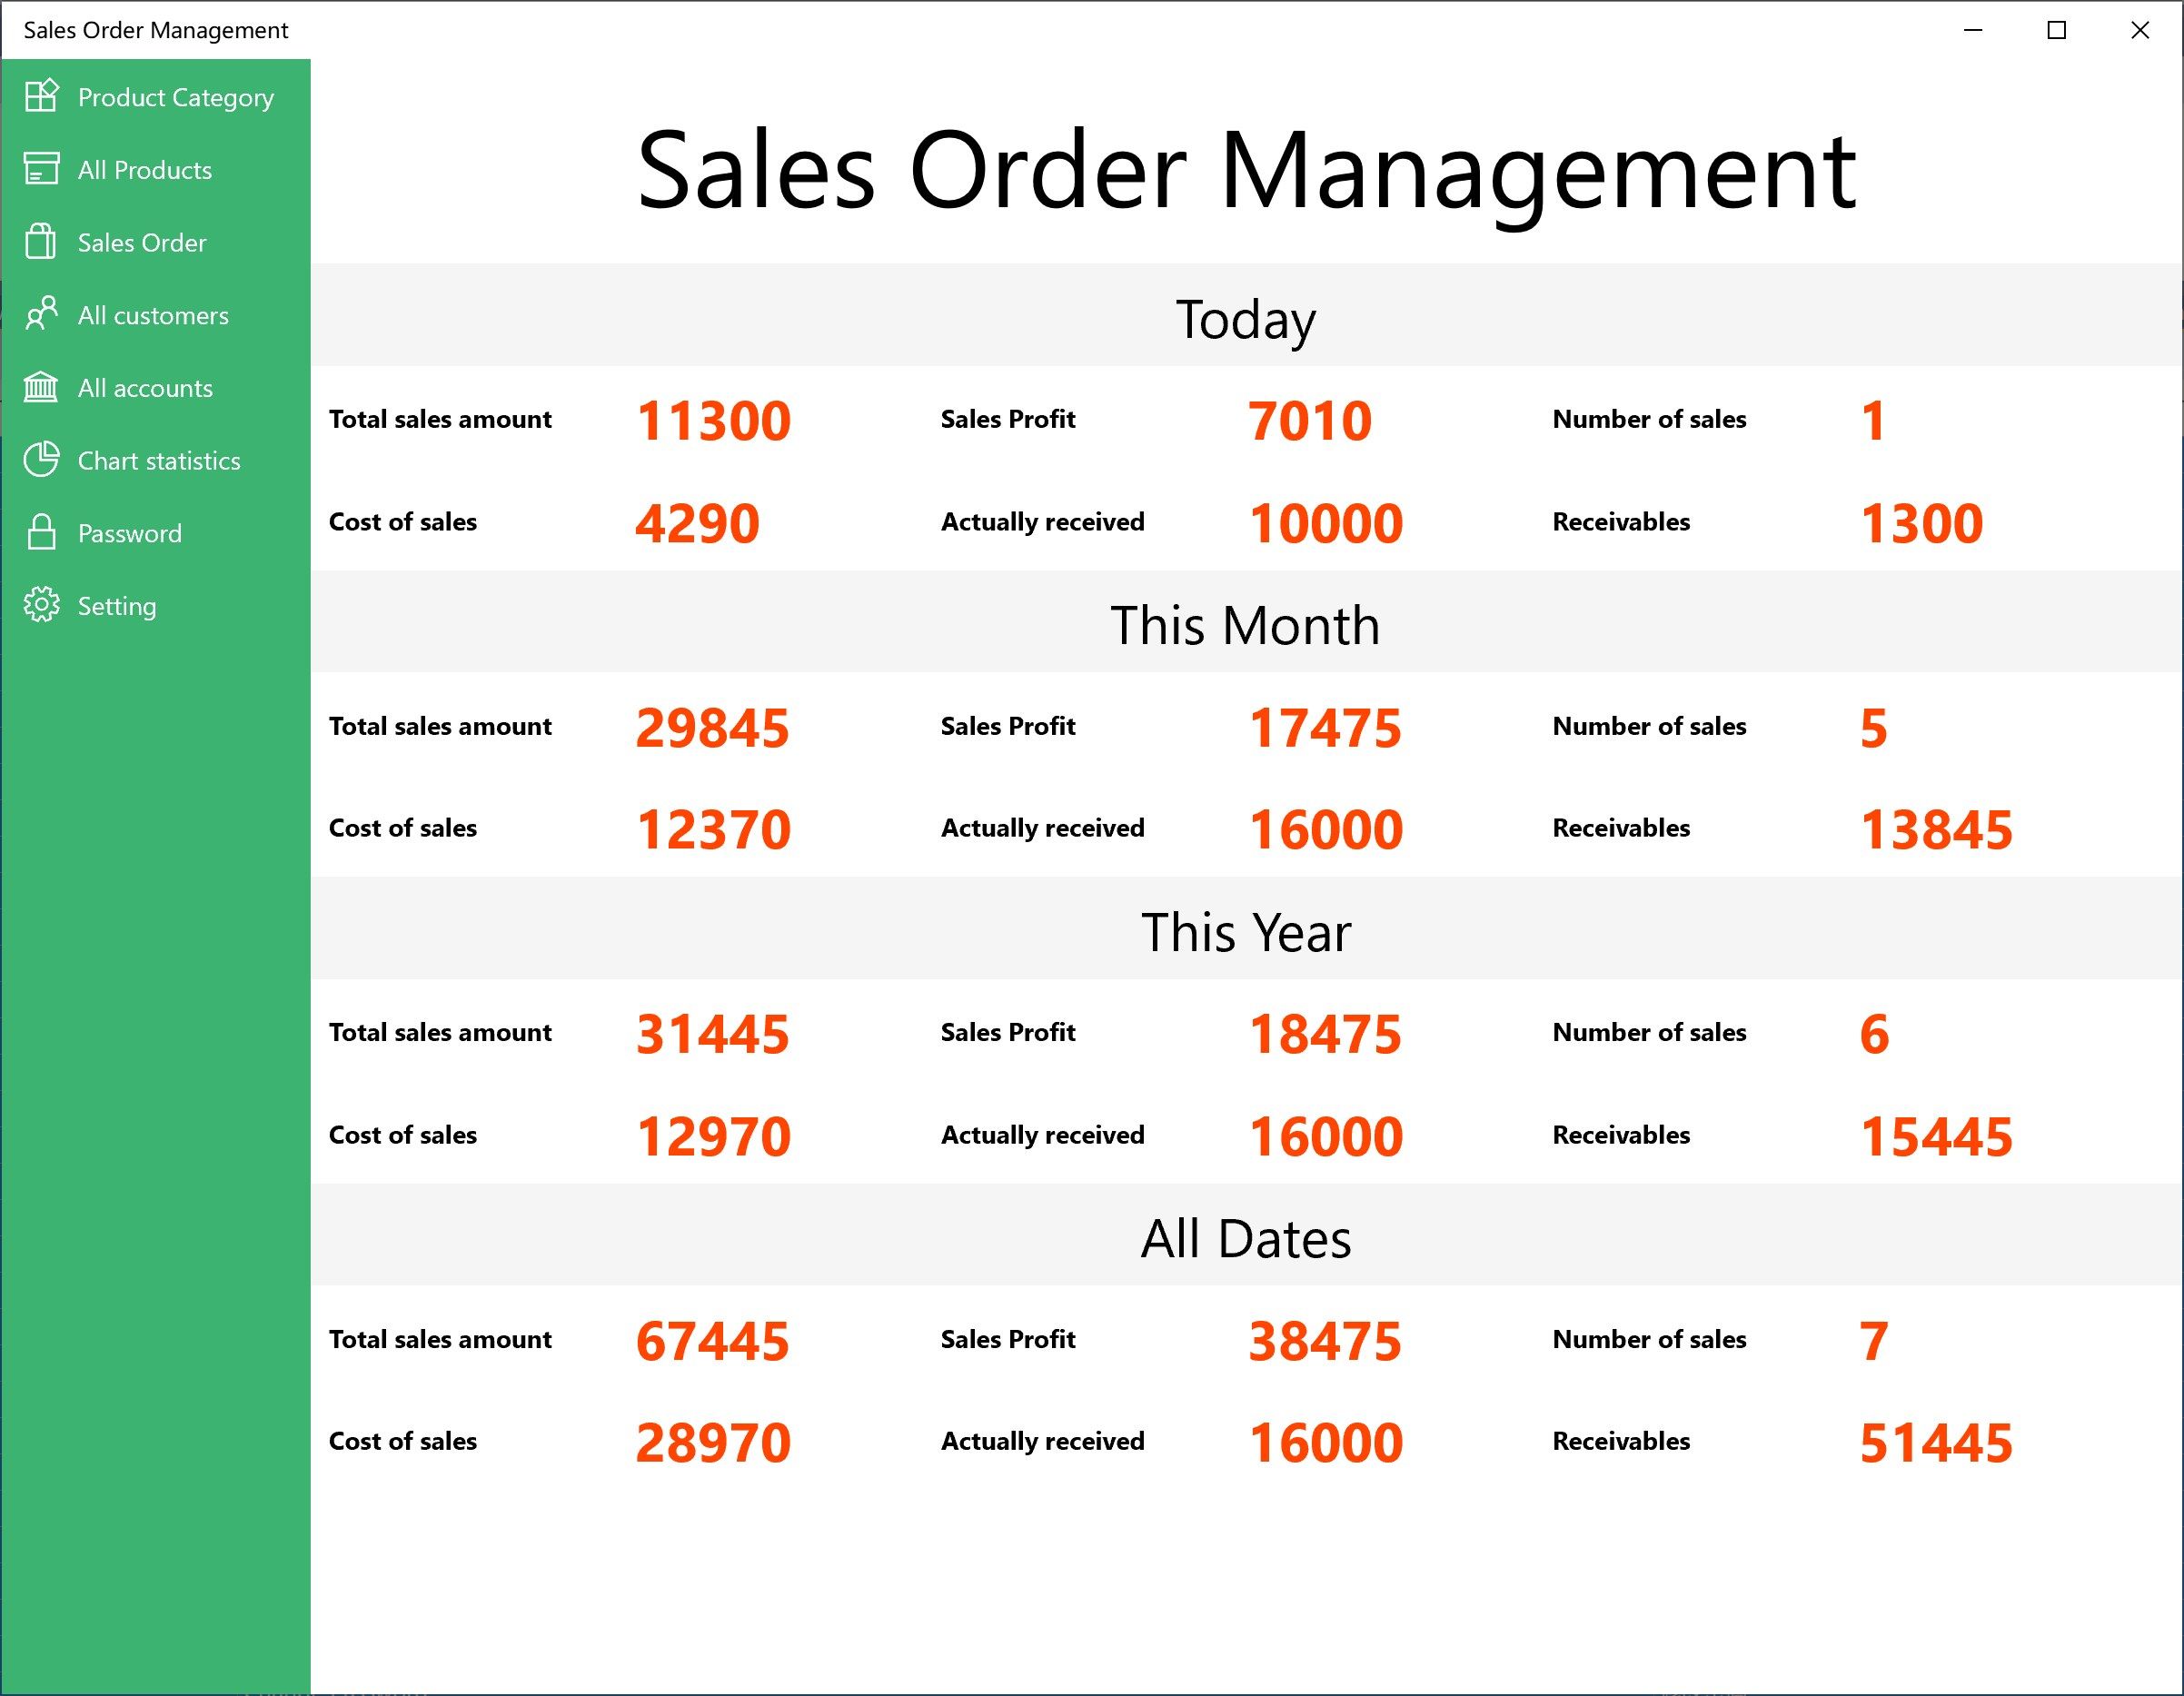 Sales Order Management - Sales Profit Statistics